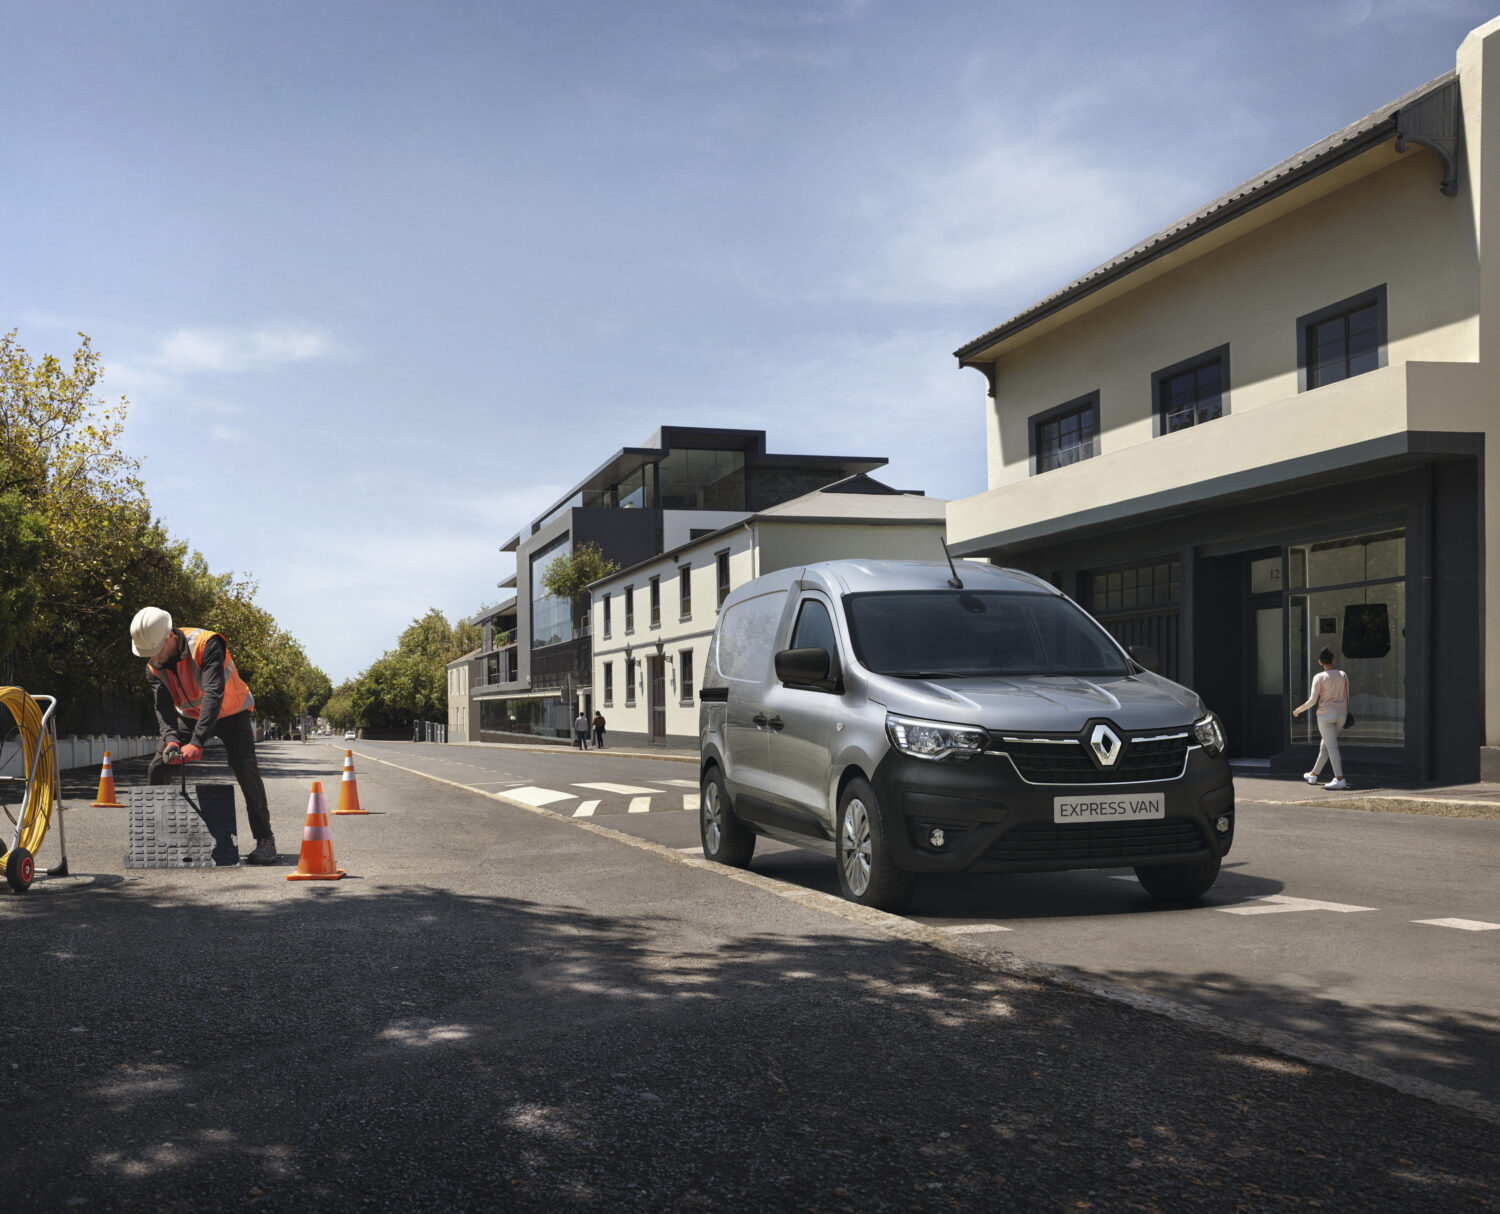 2021 - New Renault Express Van on location